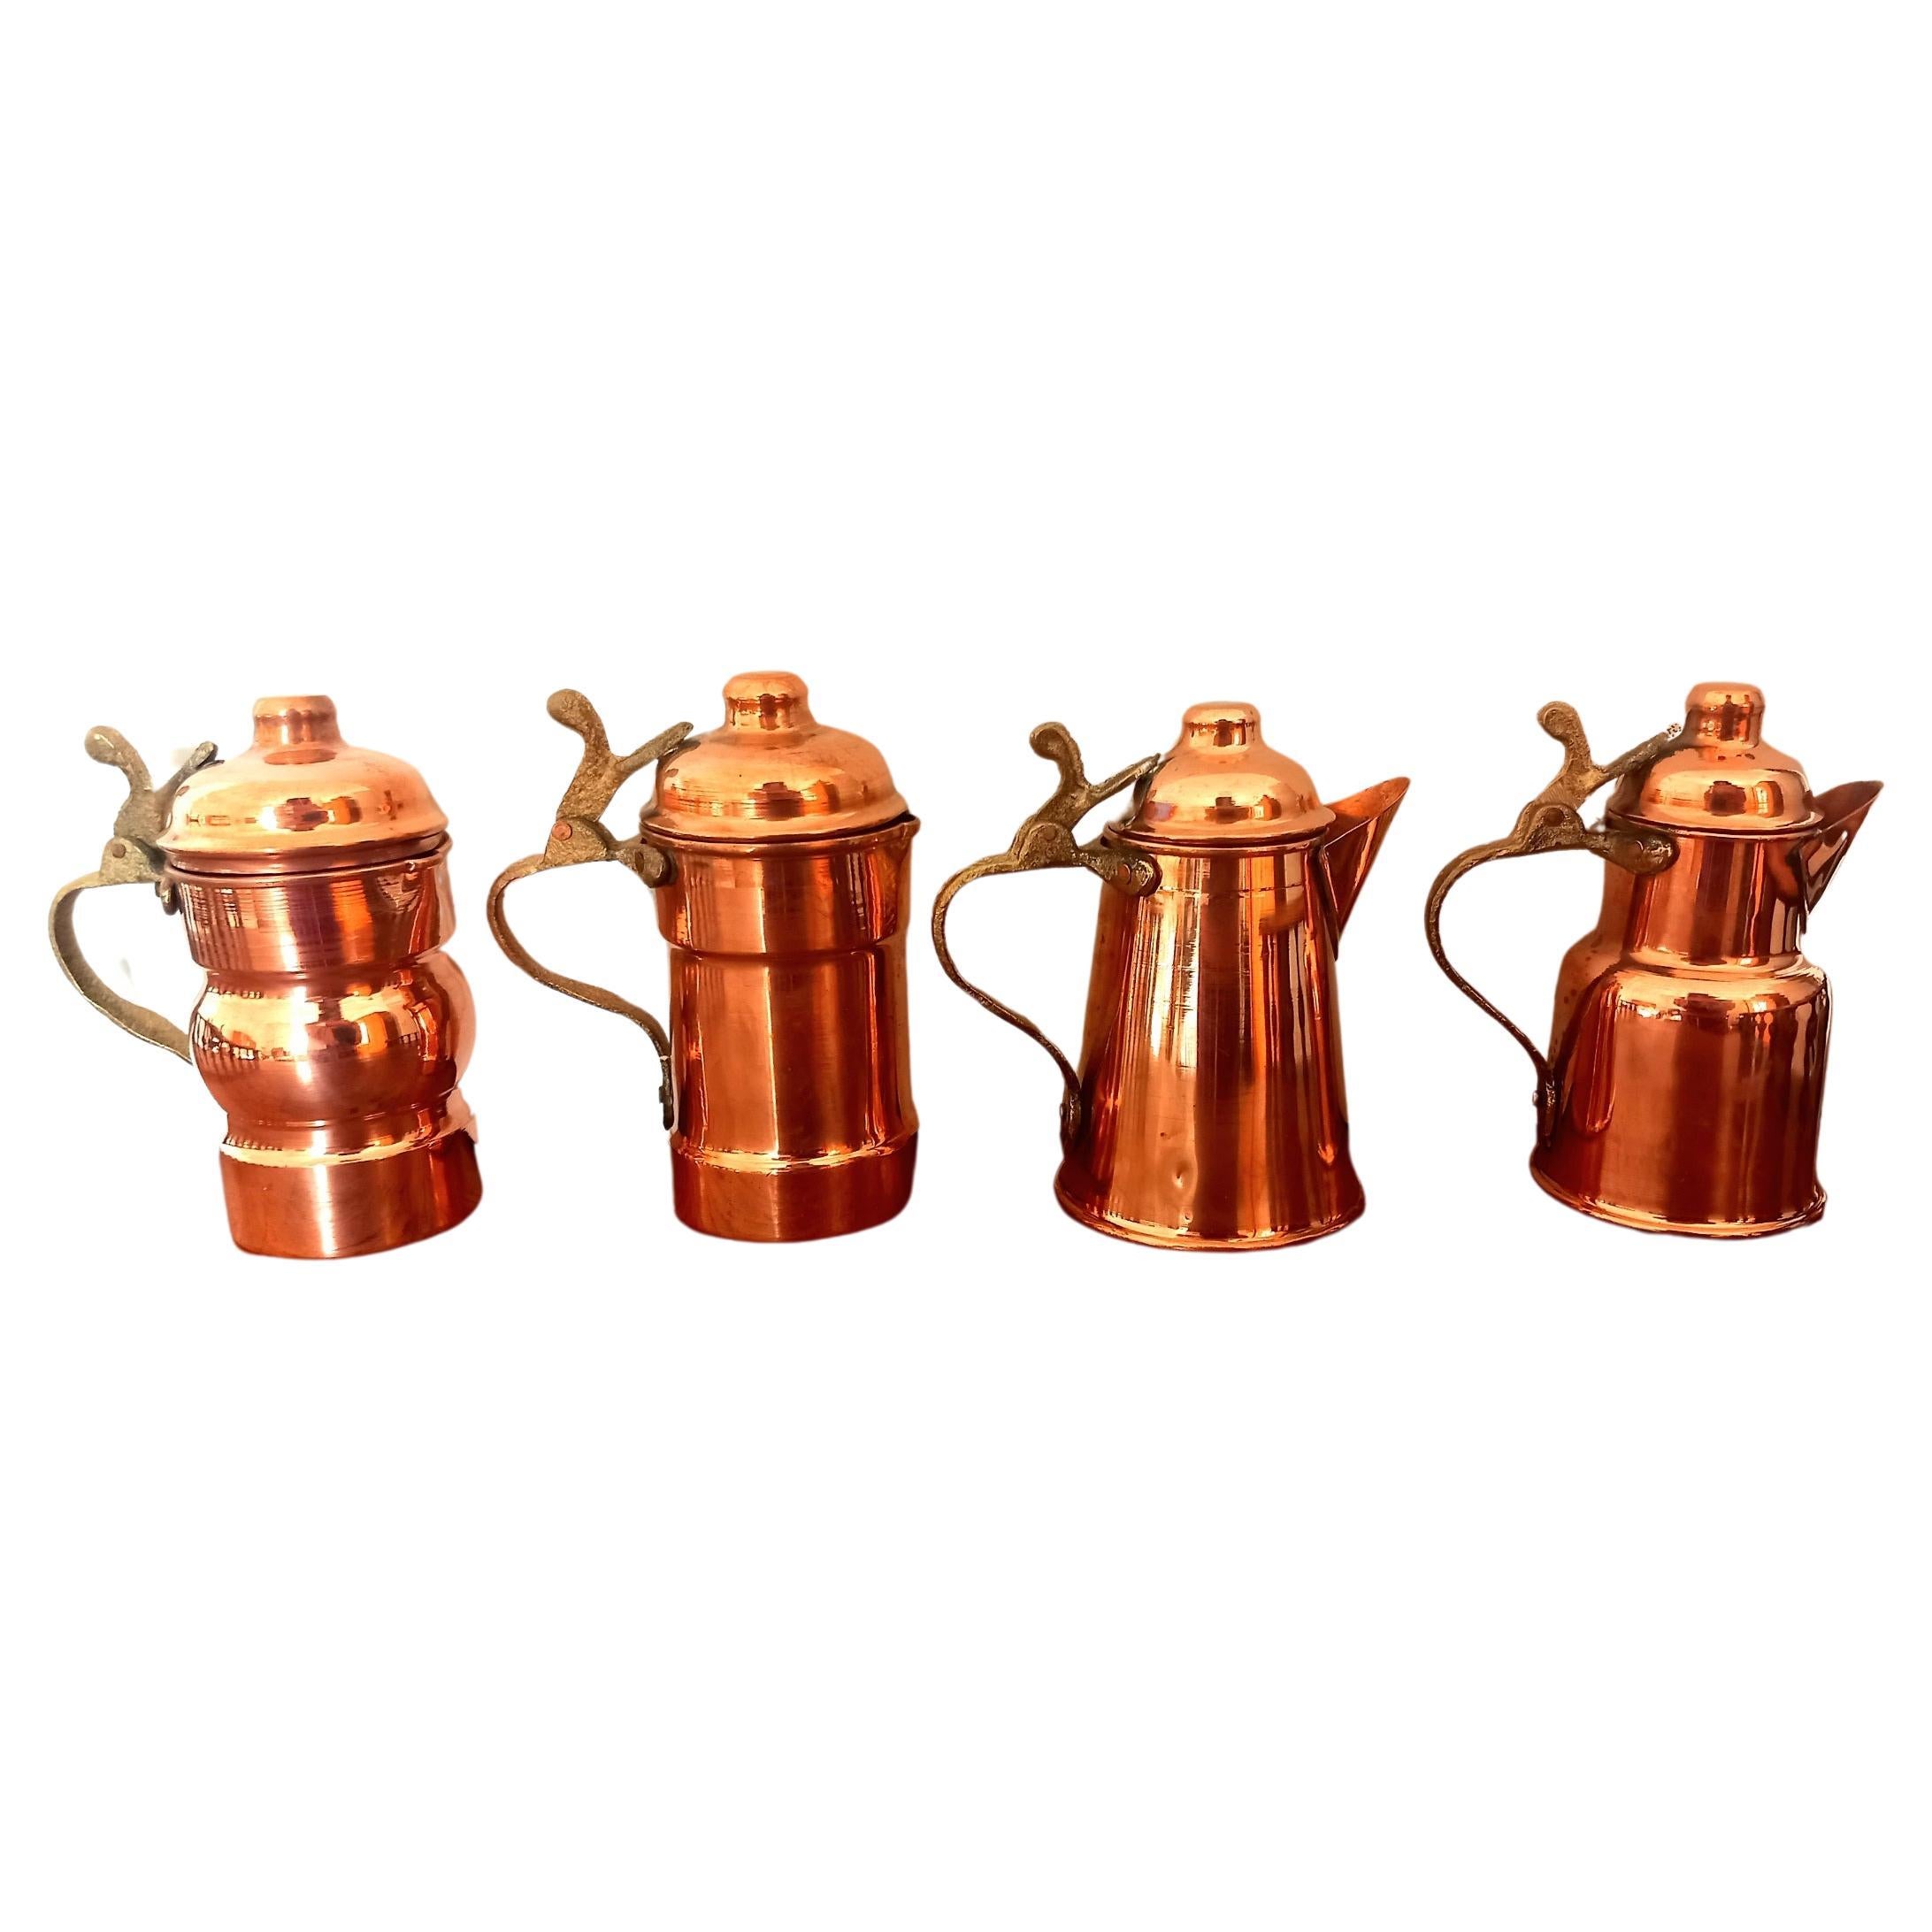  Copper Kitchen Decoration Vintage Coffee Pots For Rustic  Lot of Four Diferent For Sale